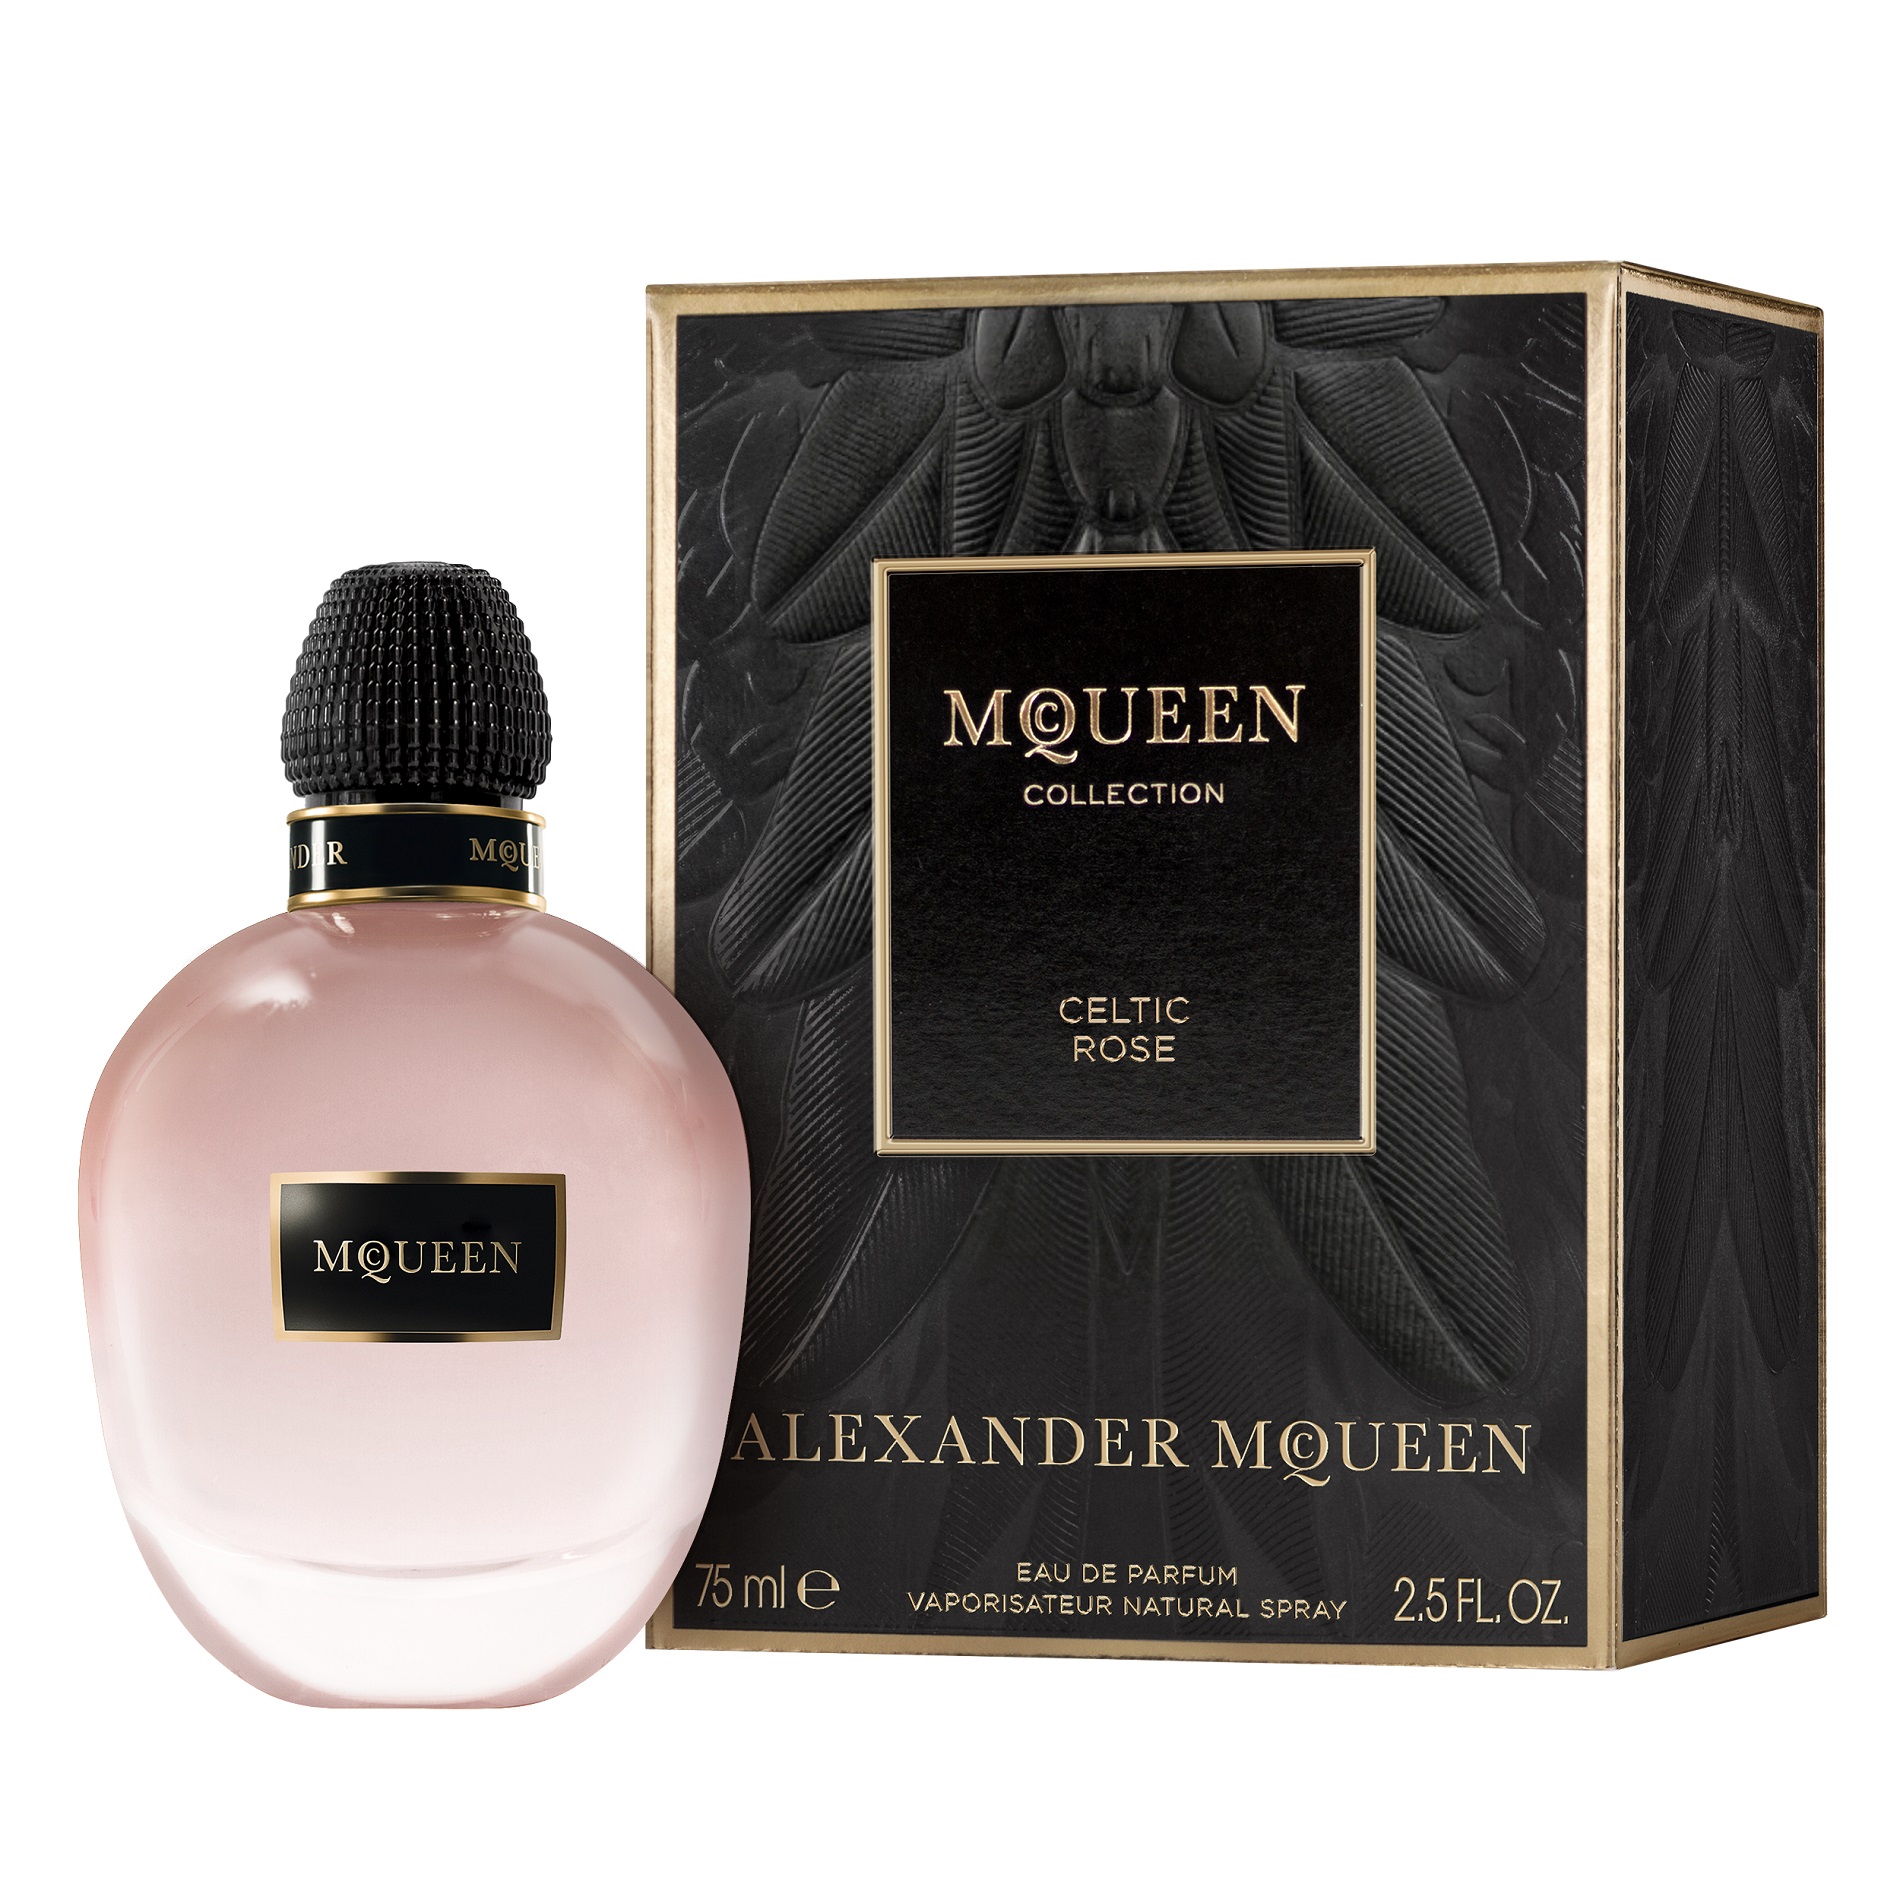 Celtic Rose Alexander McQueen perfume - a fragrance for women 2018